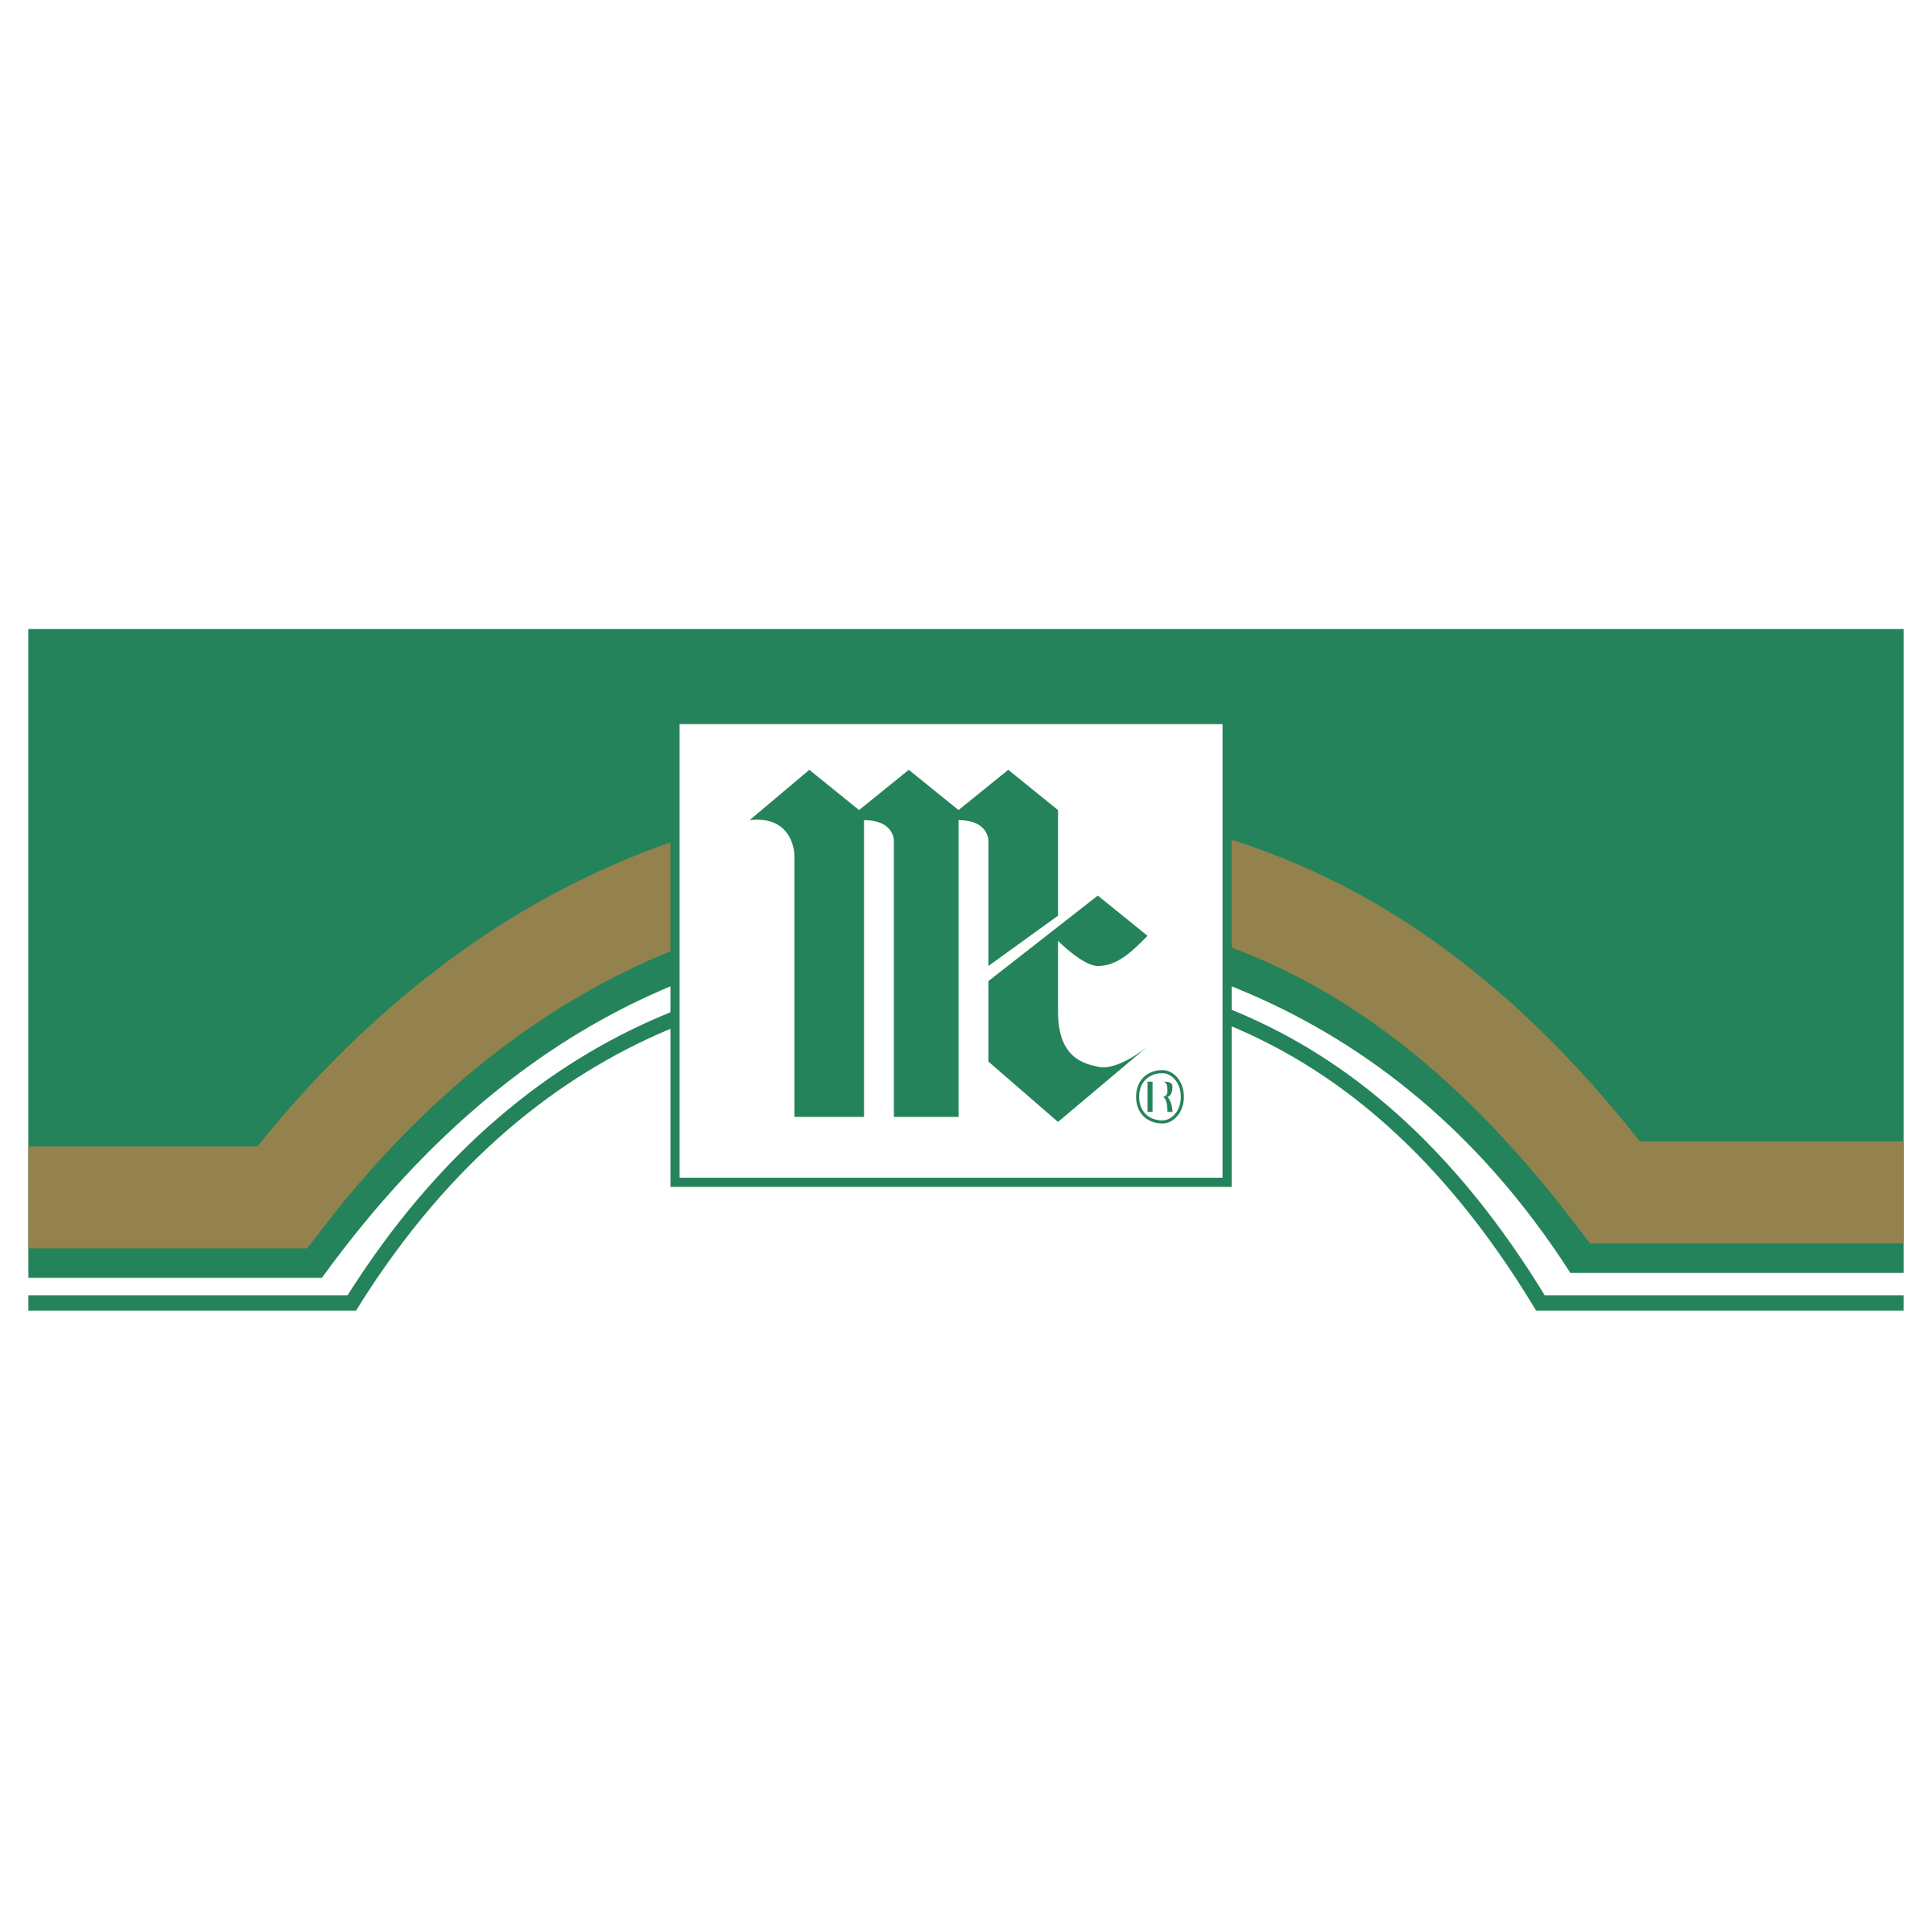 McCormick Logo PNG Transparent & SVG Vector.